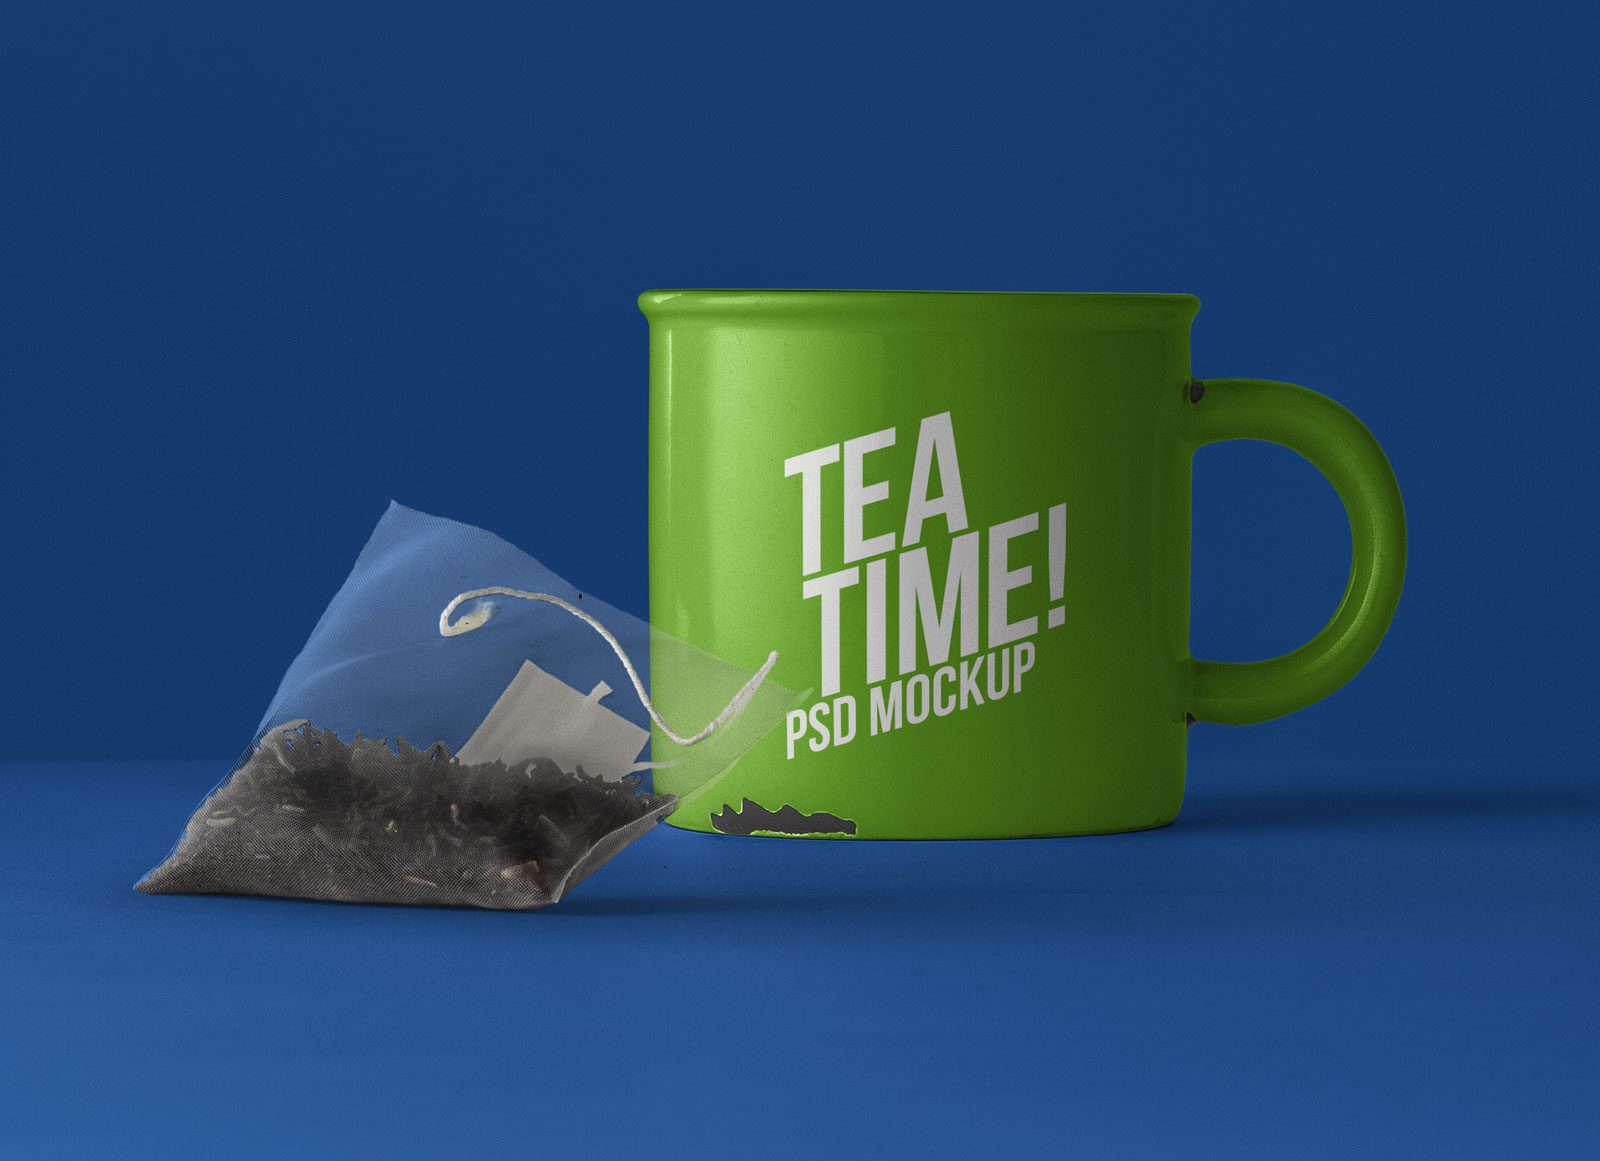 Tea Cup Mockup